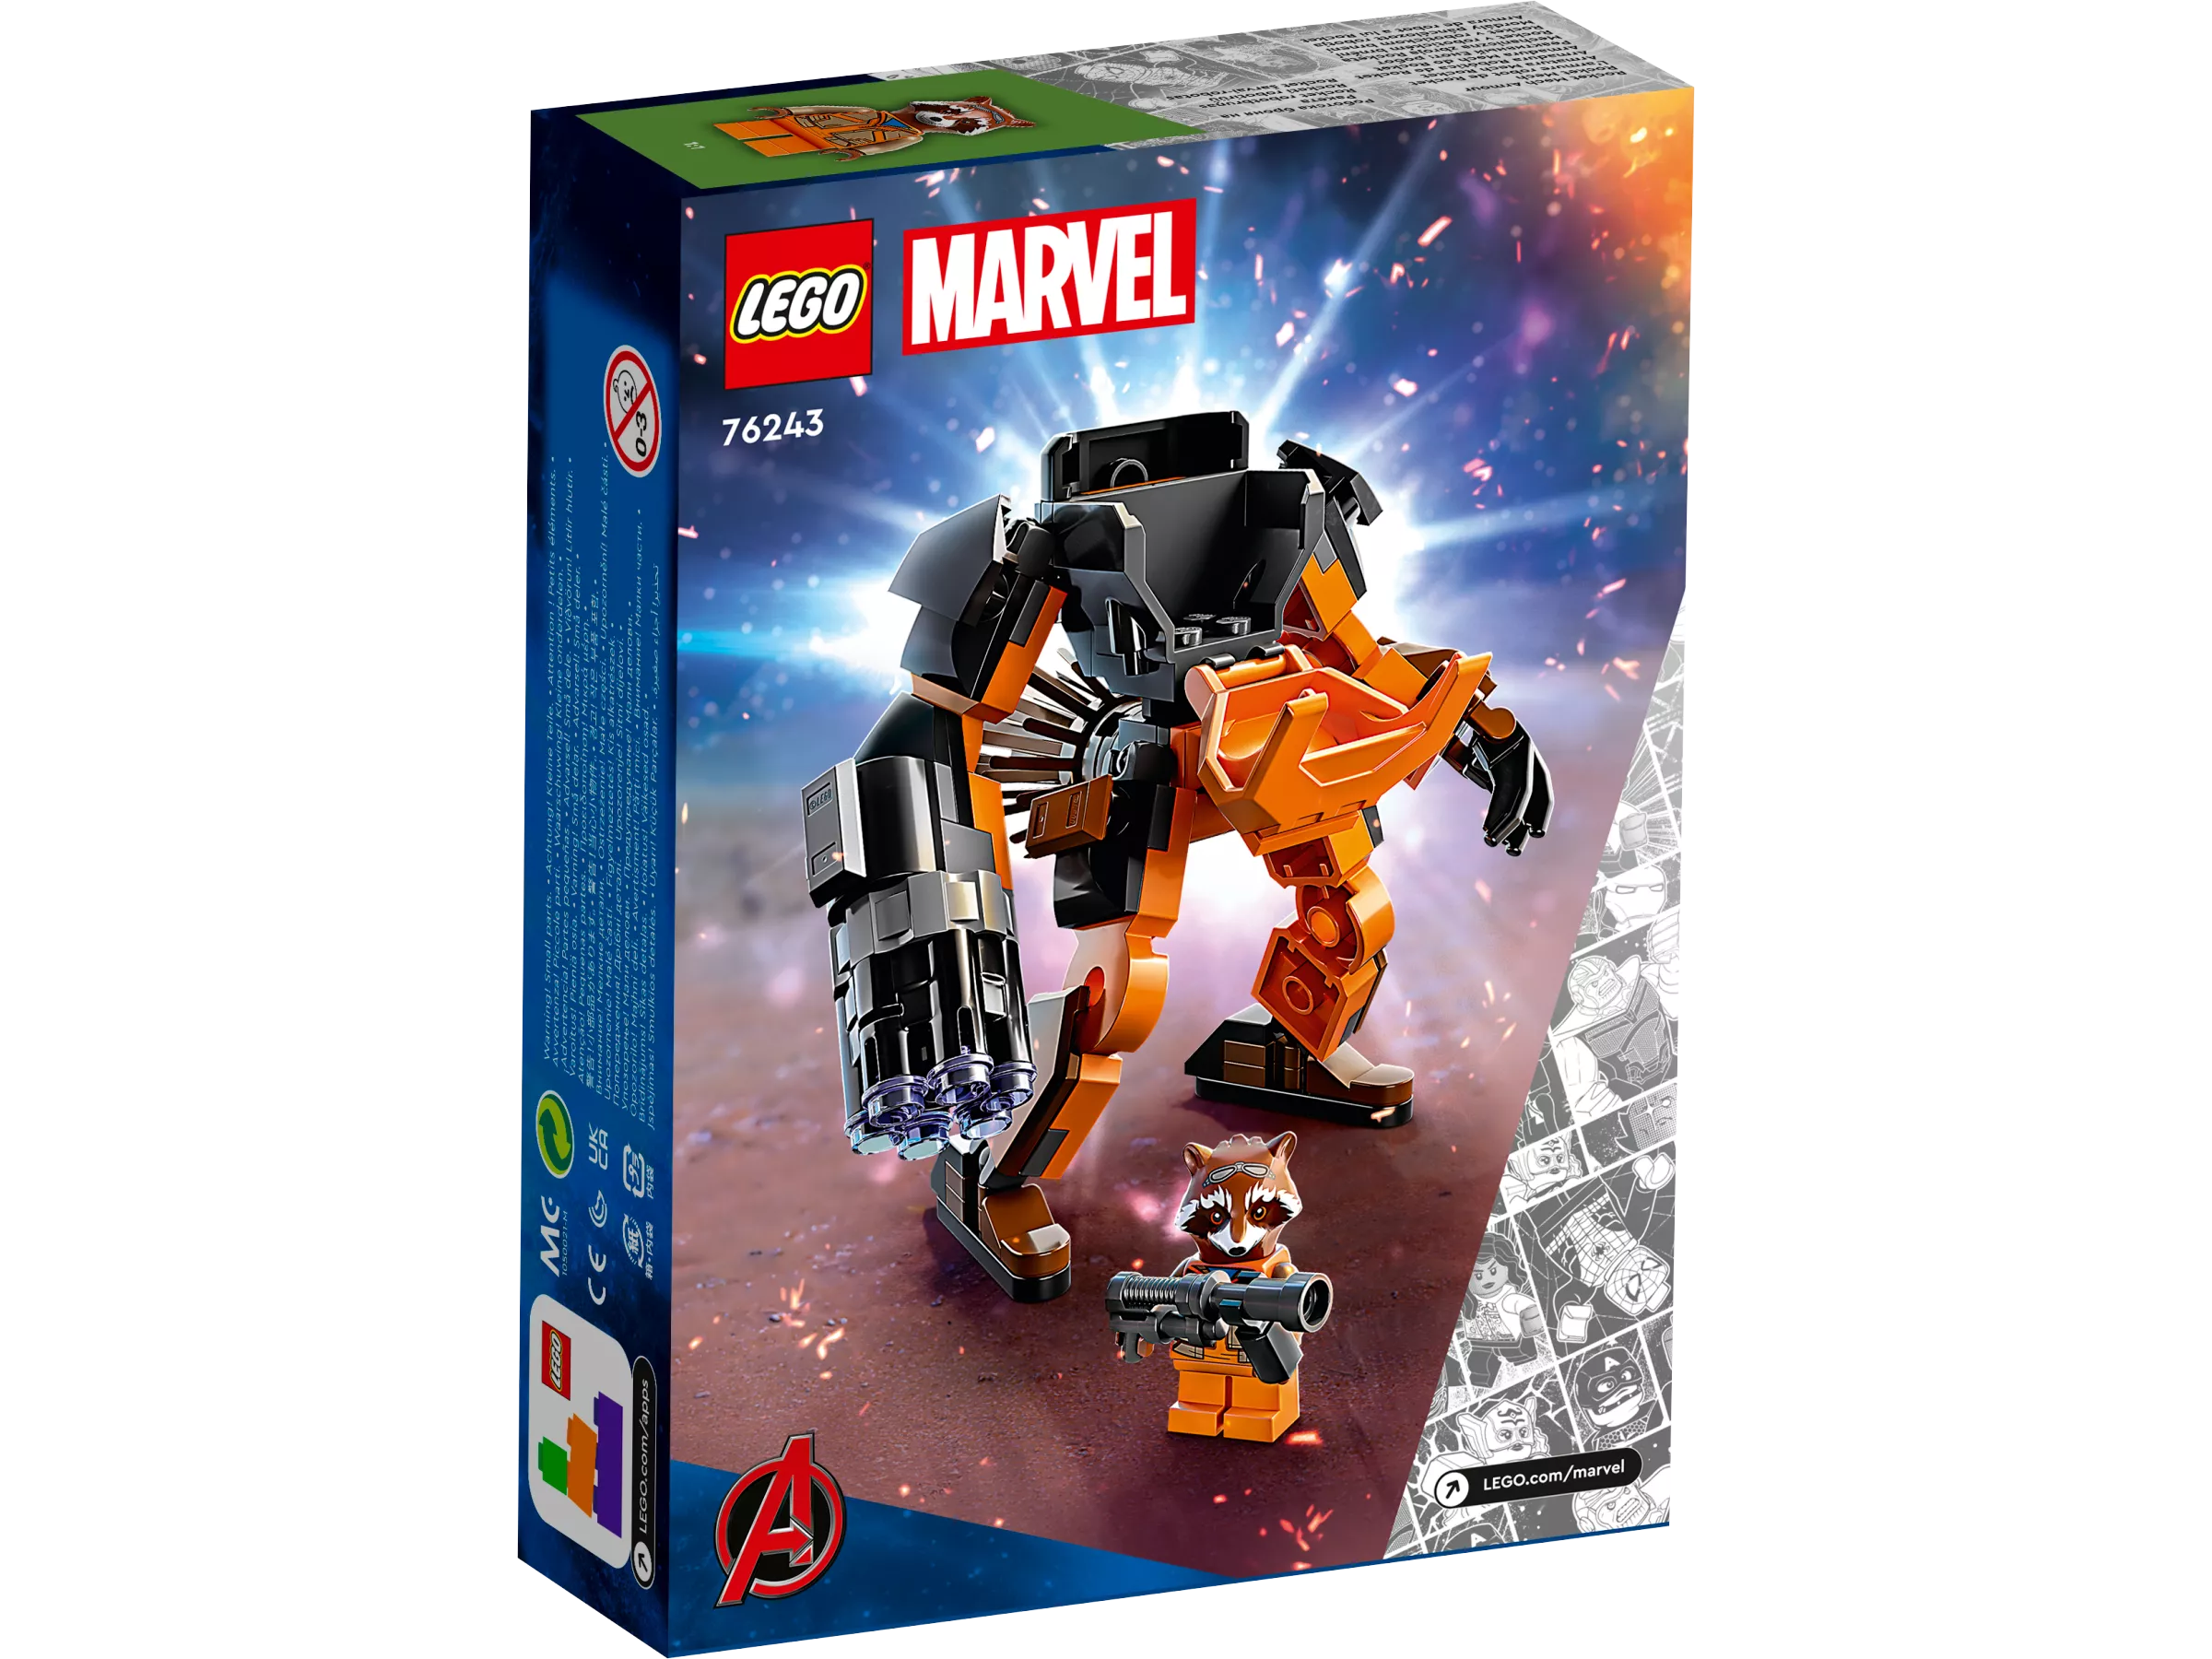 LEGO 76243 Marvel Rocket Mech